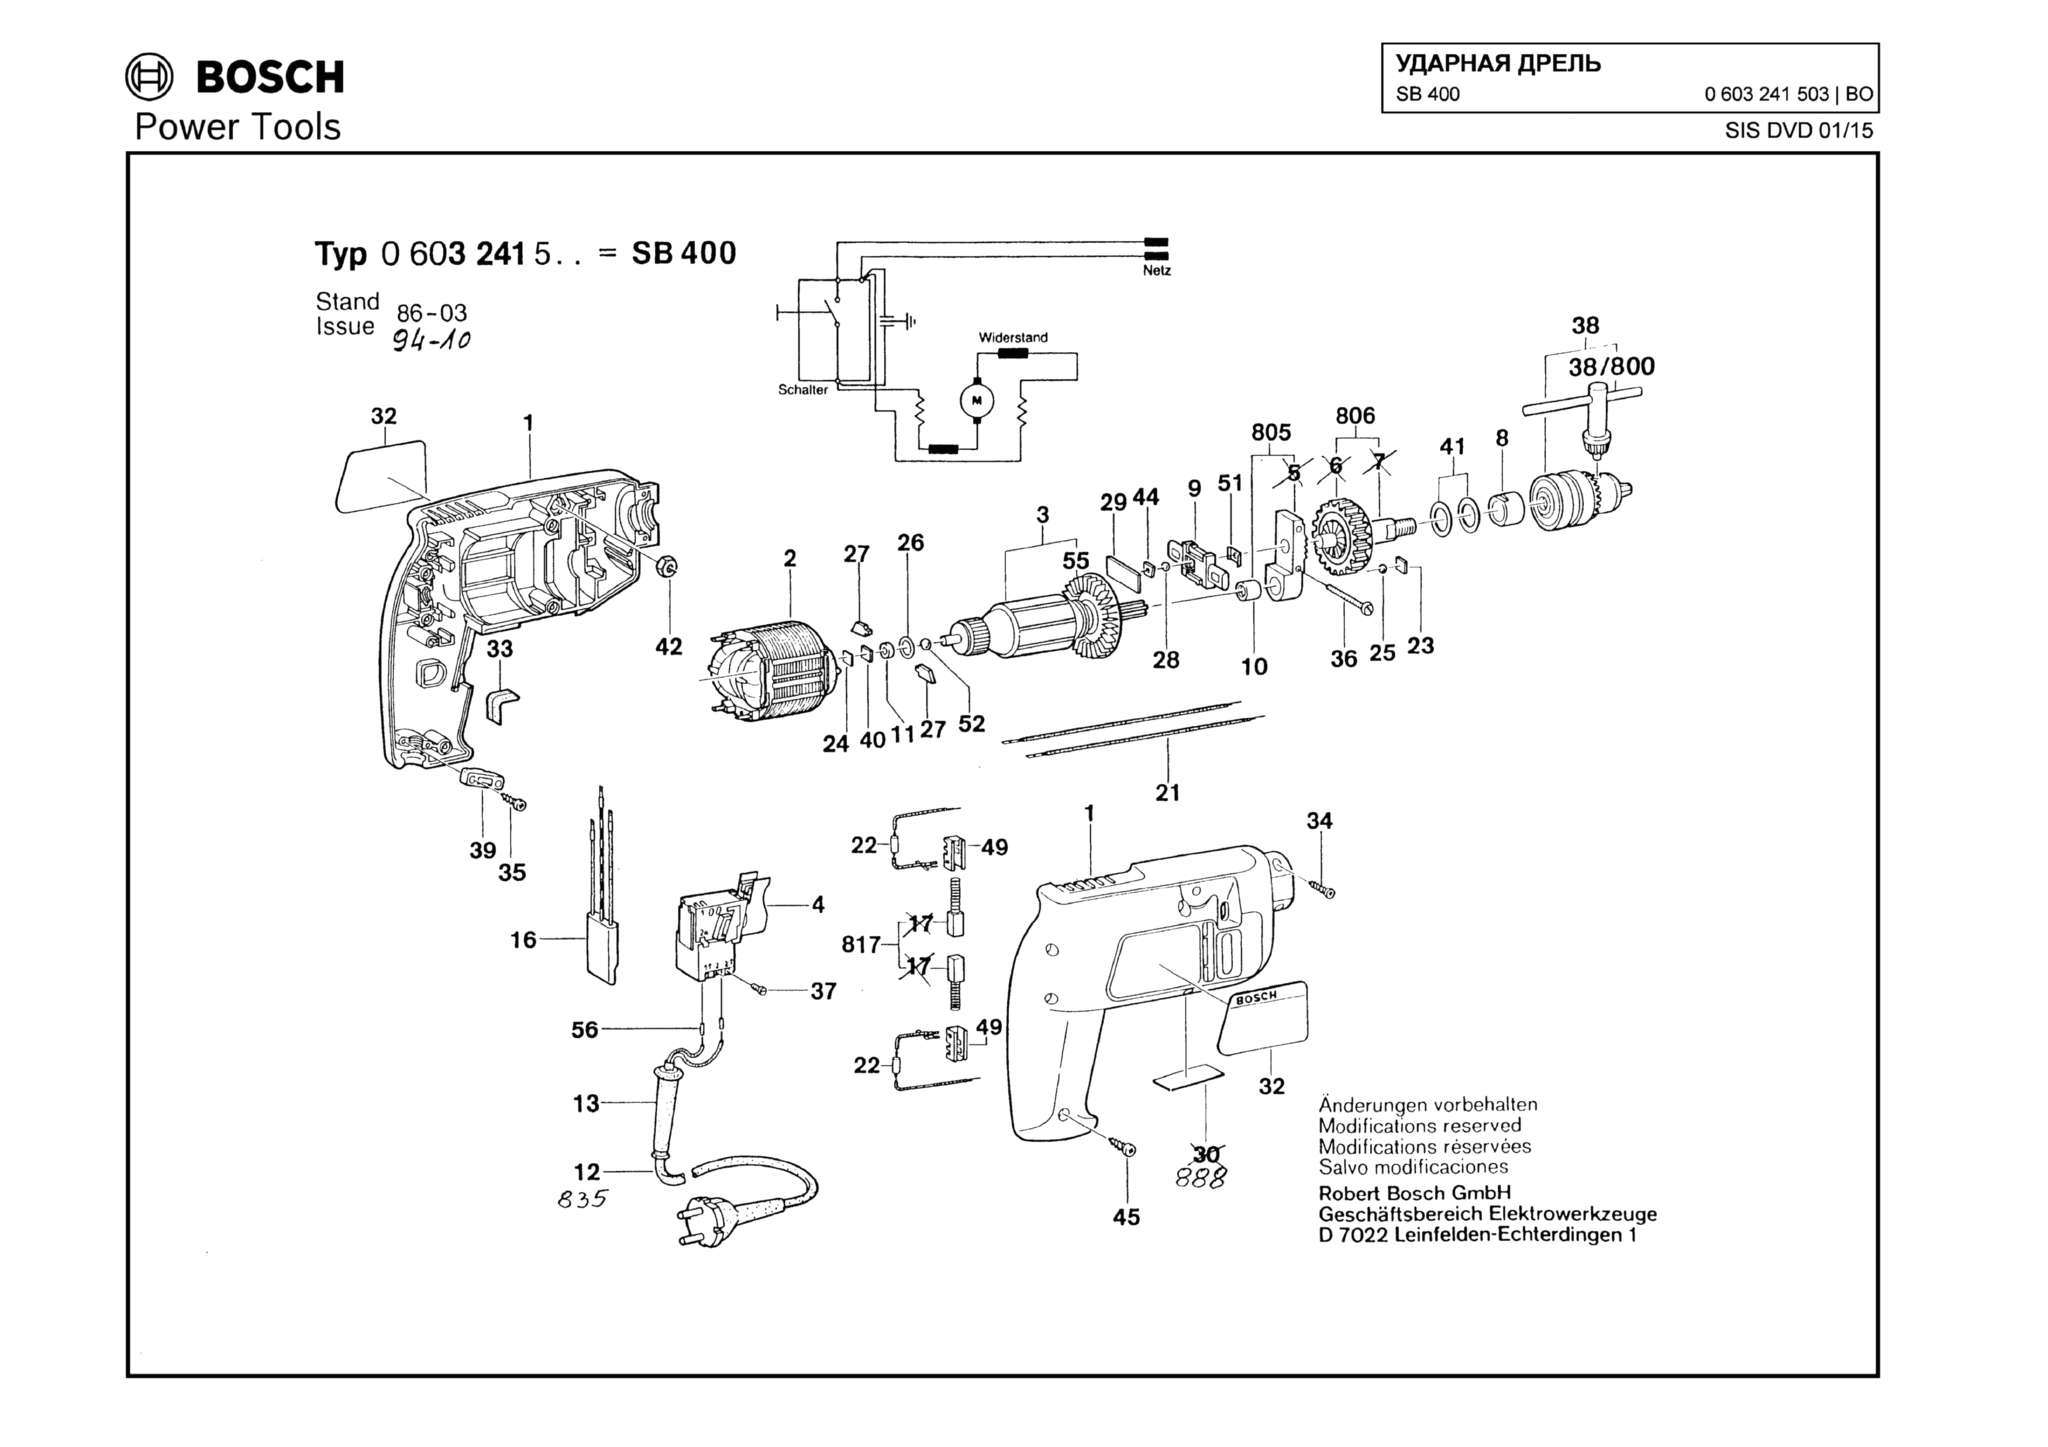 Запчасти, схема и деталировка Bosch SB 400 (ТИП 0603241503)